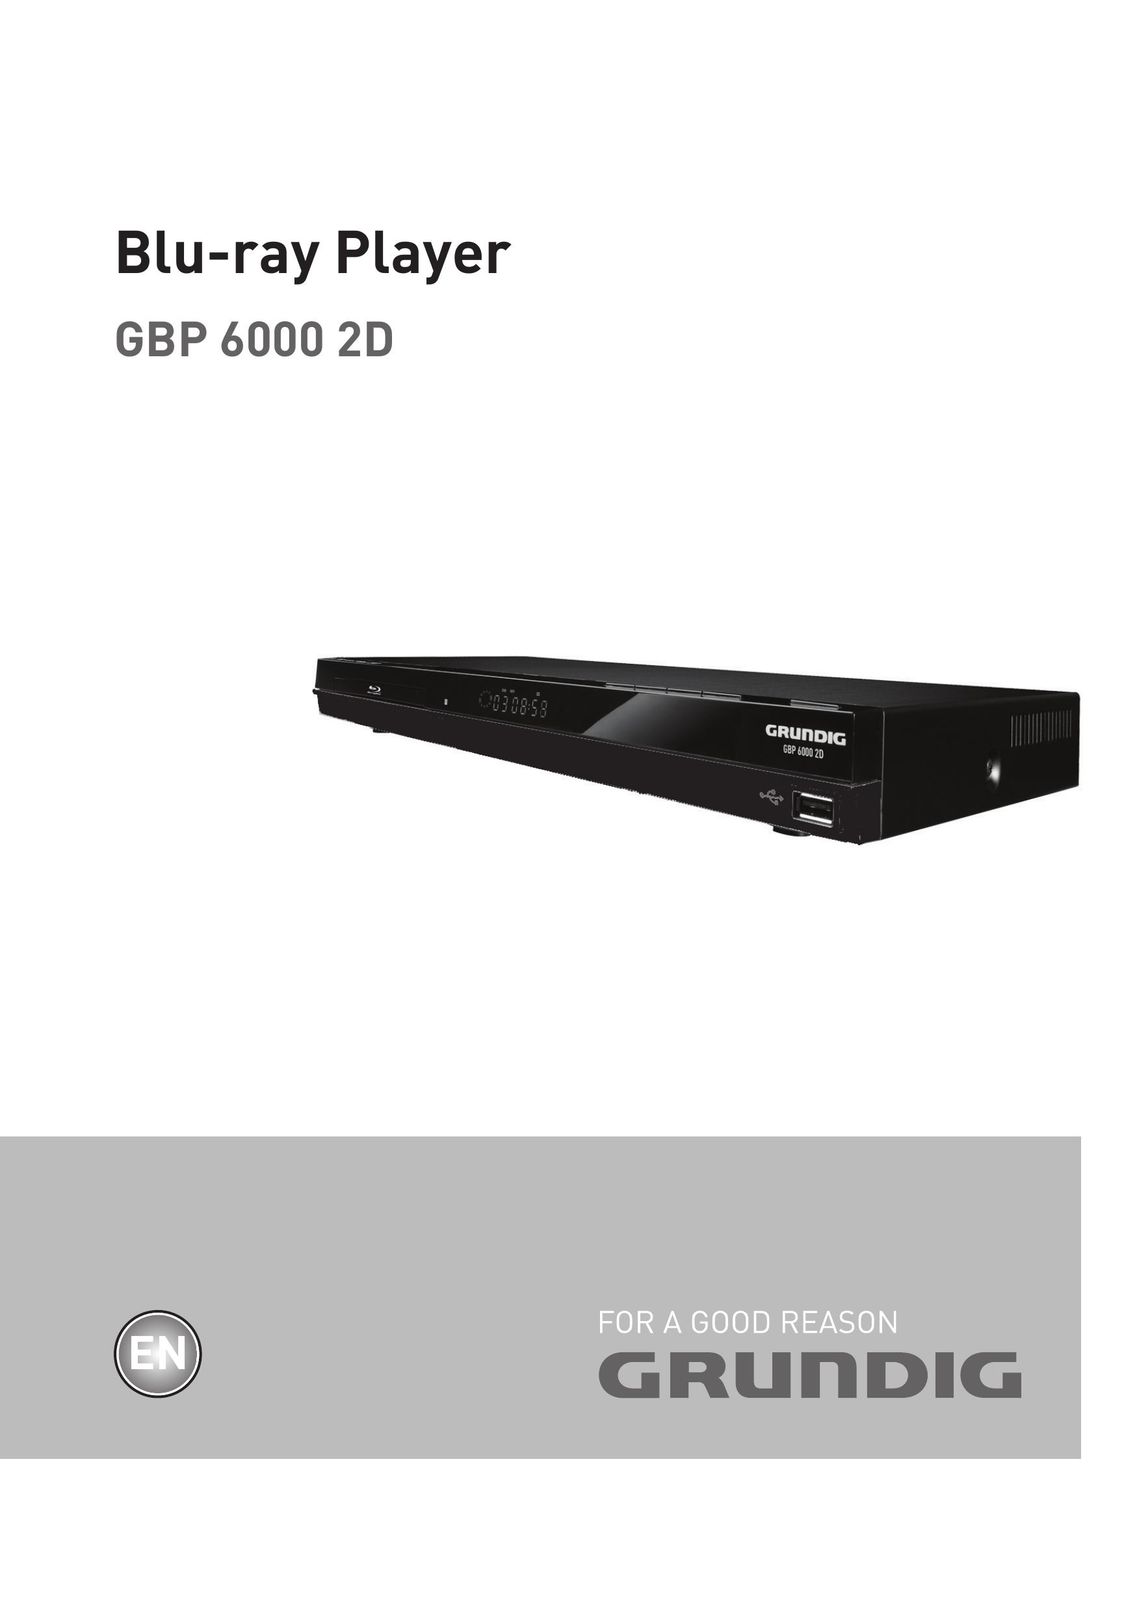 Grundig GBP 6000 2D Blu-ray Player User Manual (Page 1)